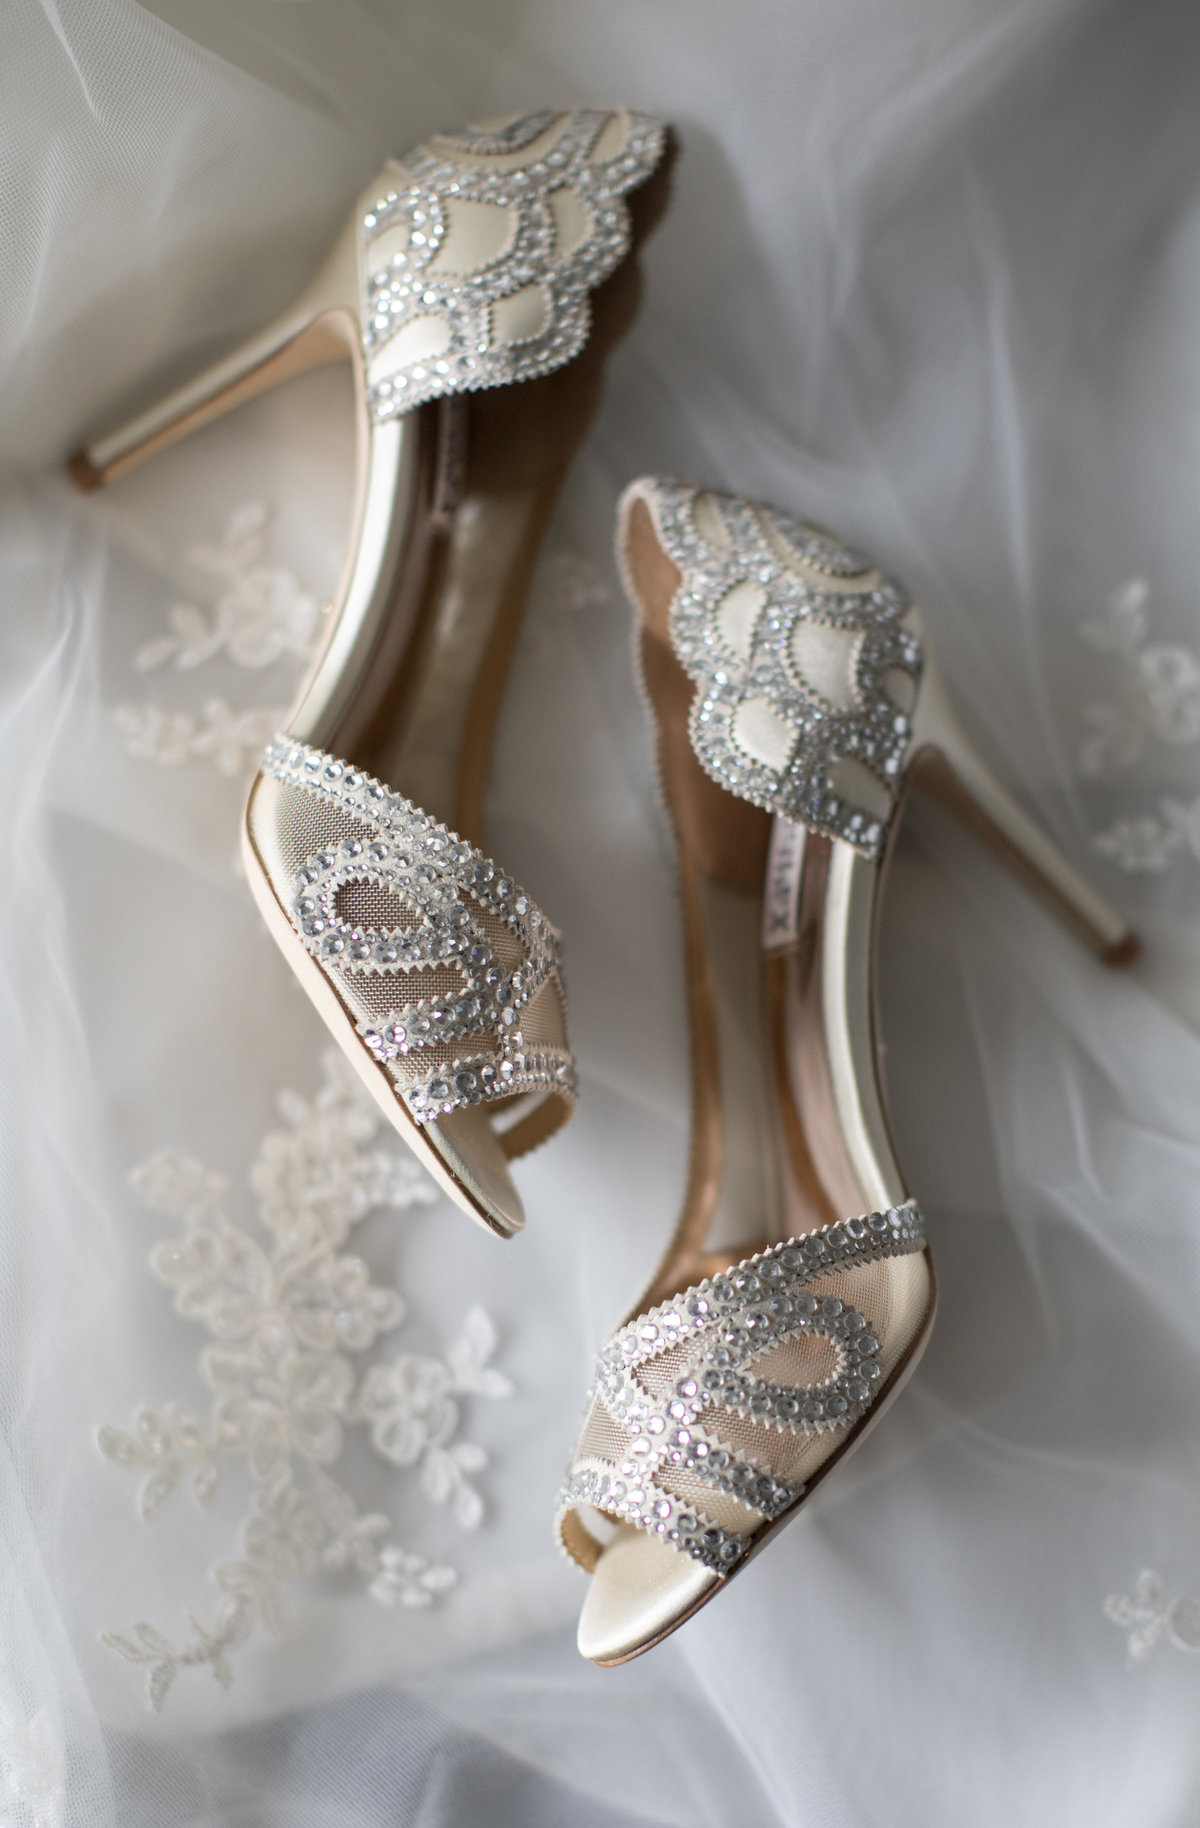 shoes laying on wedding dress before clarks landing yacht club wedding